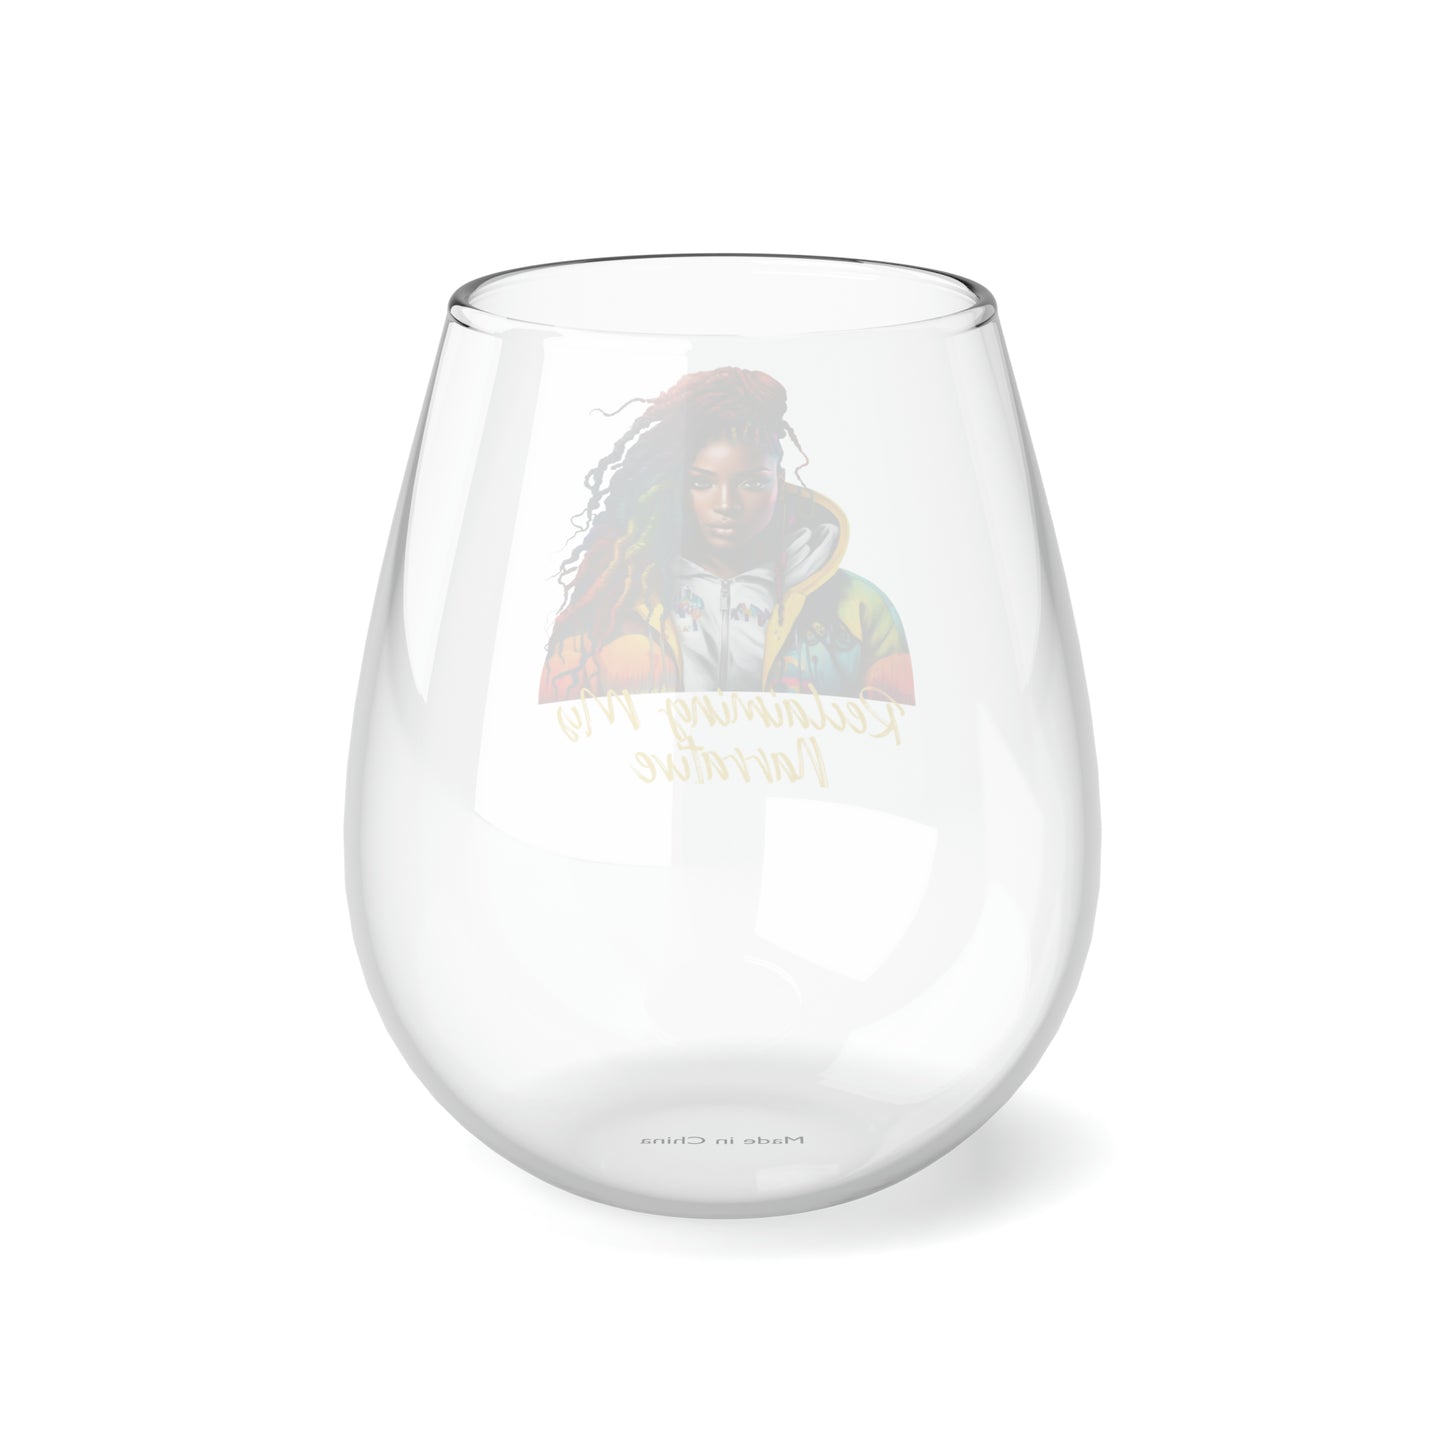 reclaiming my Narrative Stemless Wine Glass, 11.75oz